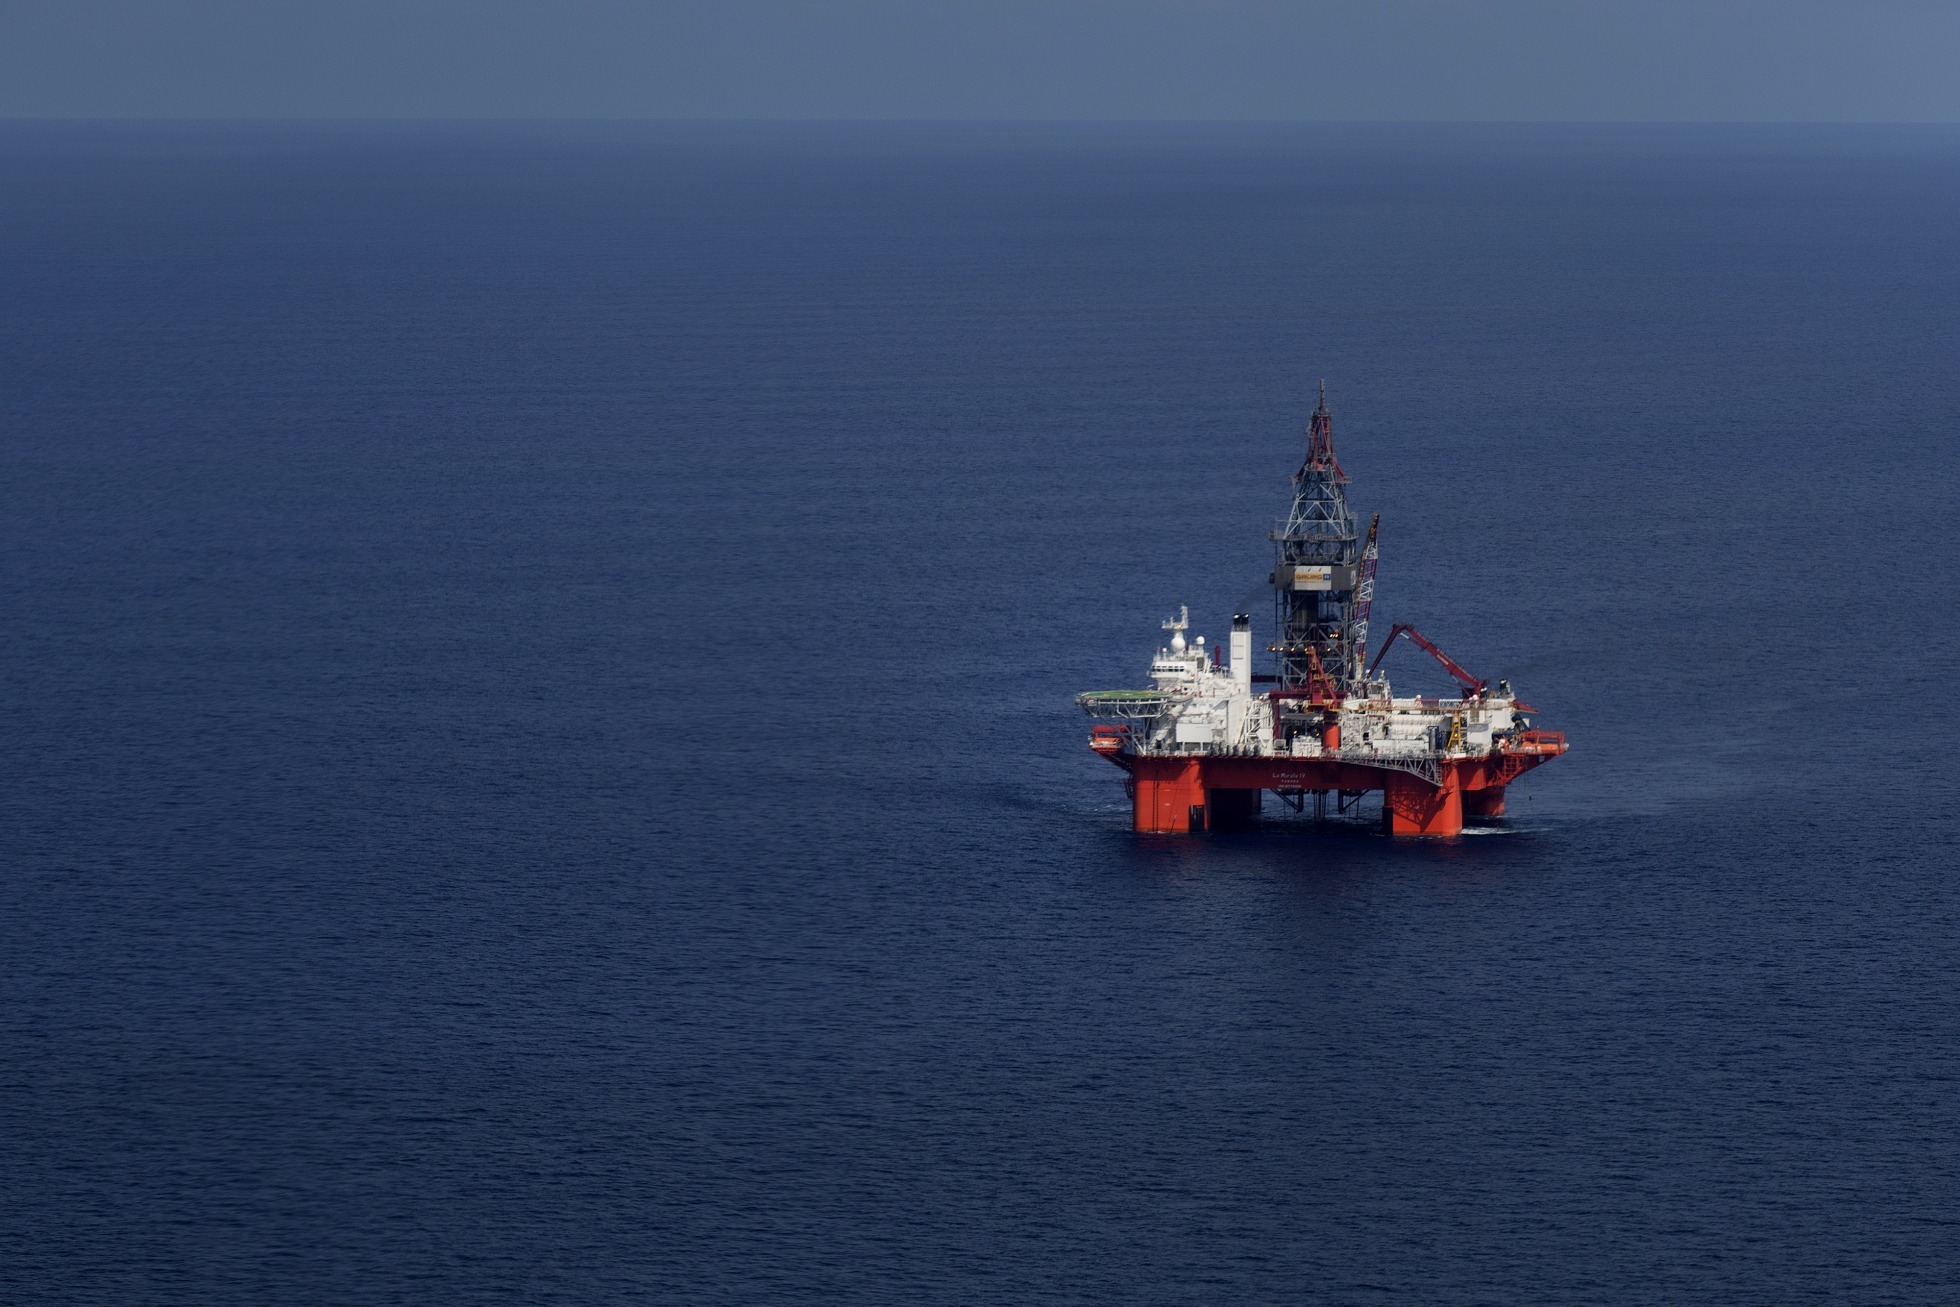 The Petroleos Mexicanos (Pemex) La Muralla IV deep sea crude oil platform stands in the waters off Veracruz, Mexico, on Friday, Aug. 30, 2013. Photographer: Susana Gonzalez/Bloomberg